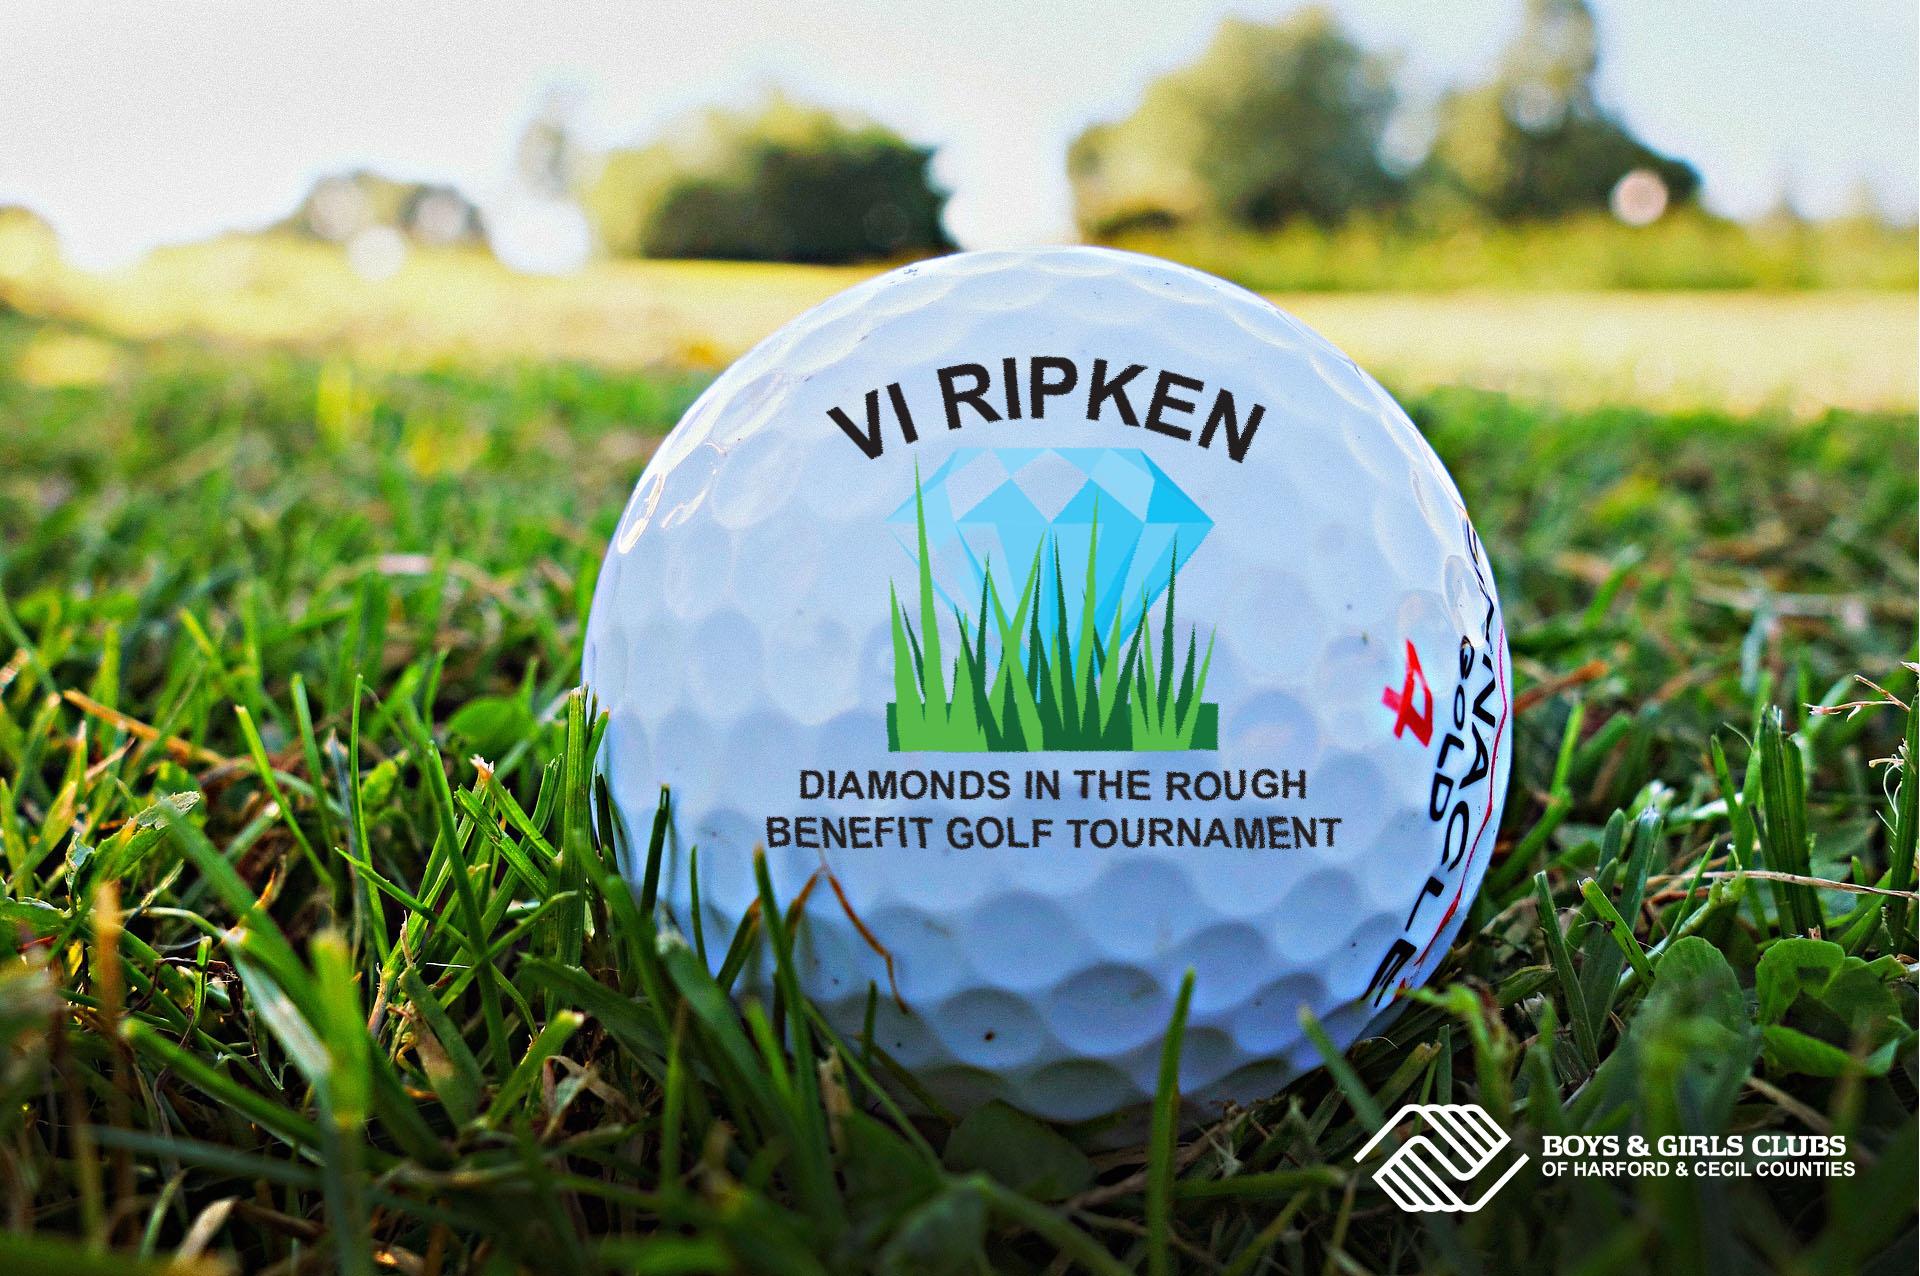 21st Annual Vi Ripken Diamonds in the Rough Benefit Golf Tournament